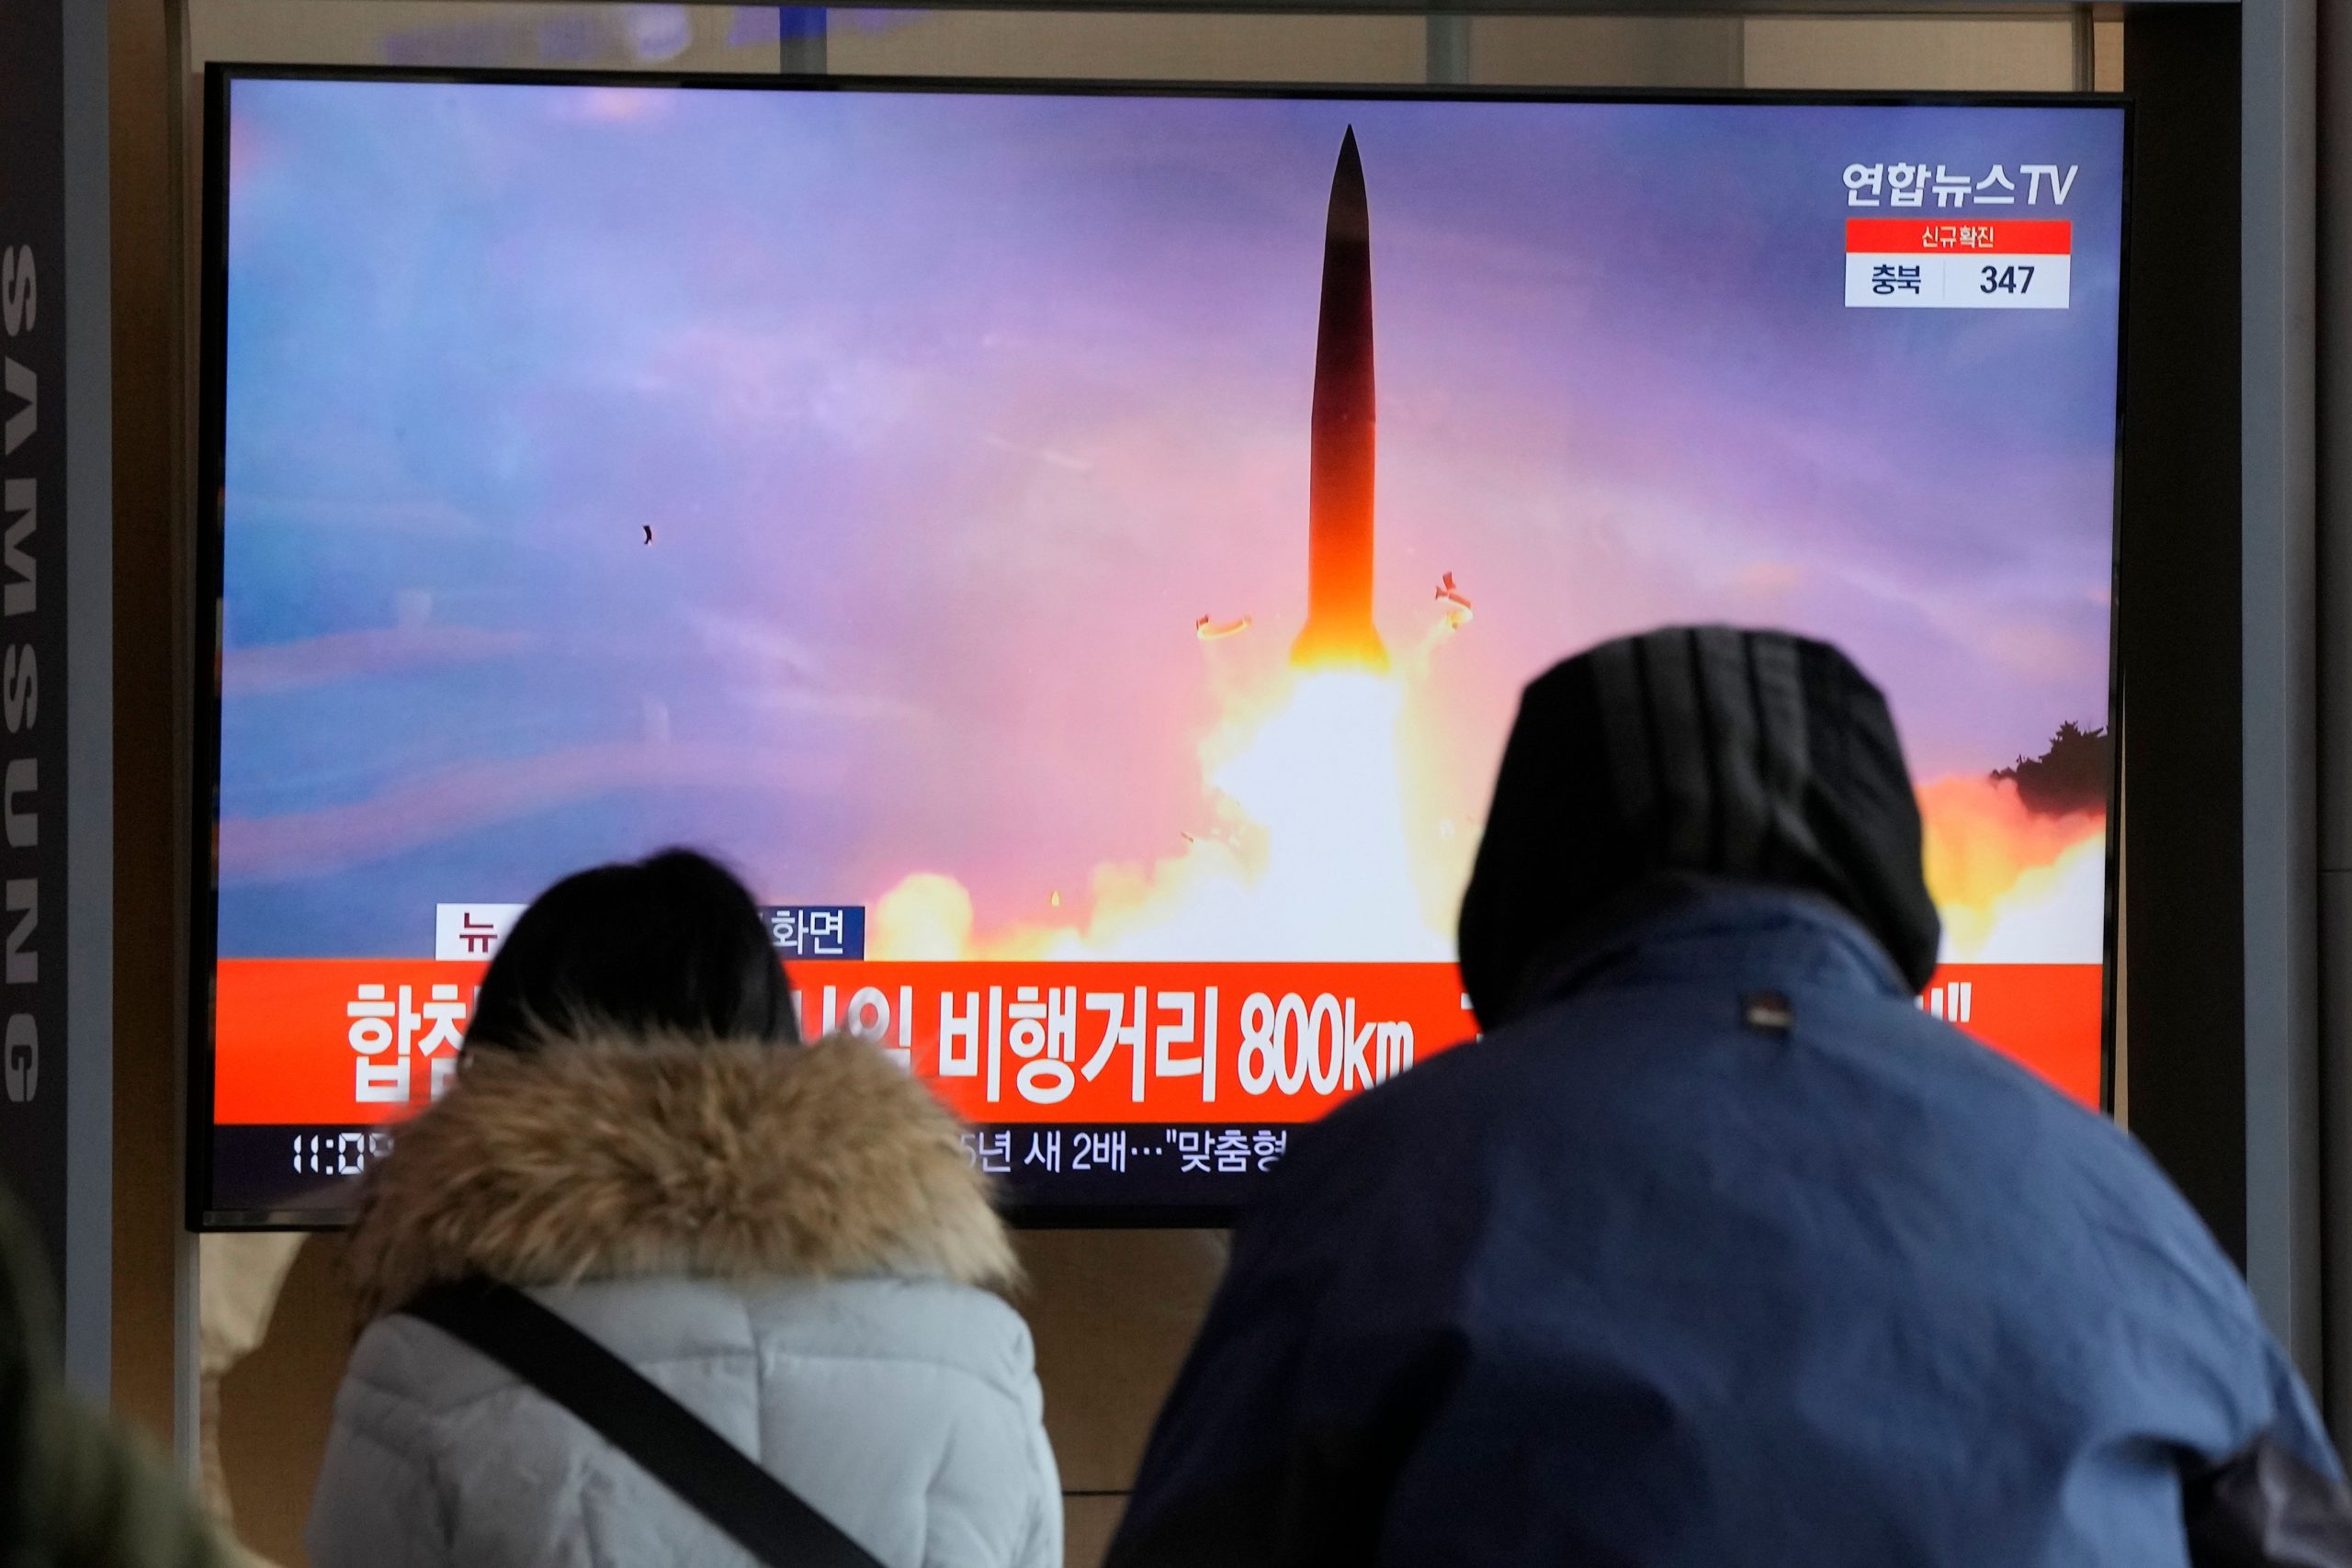 North Korea launches projectile into sea: South Korean military